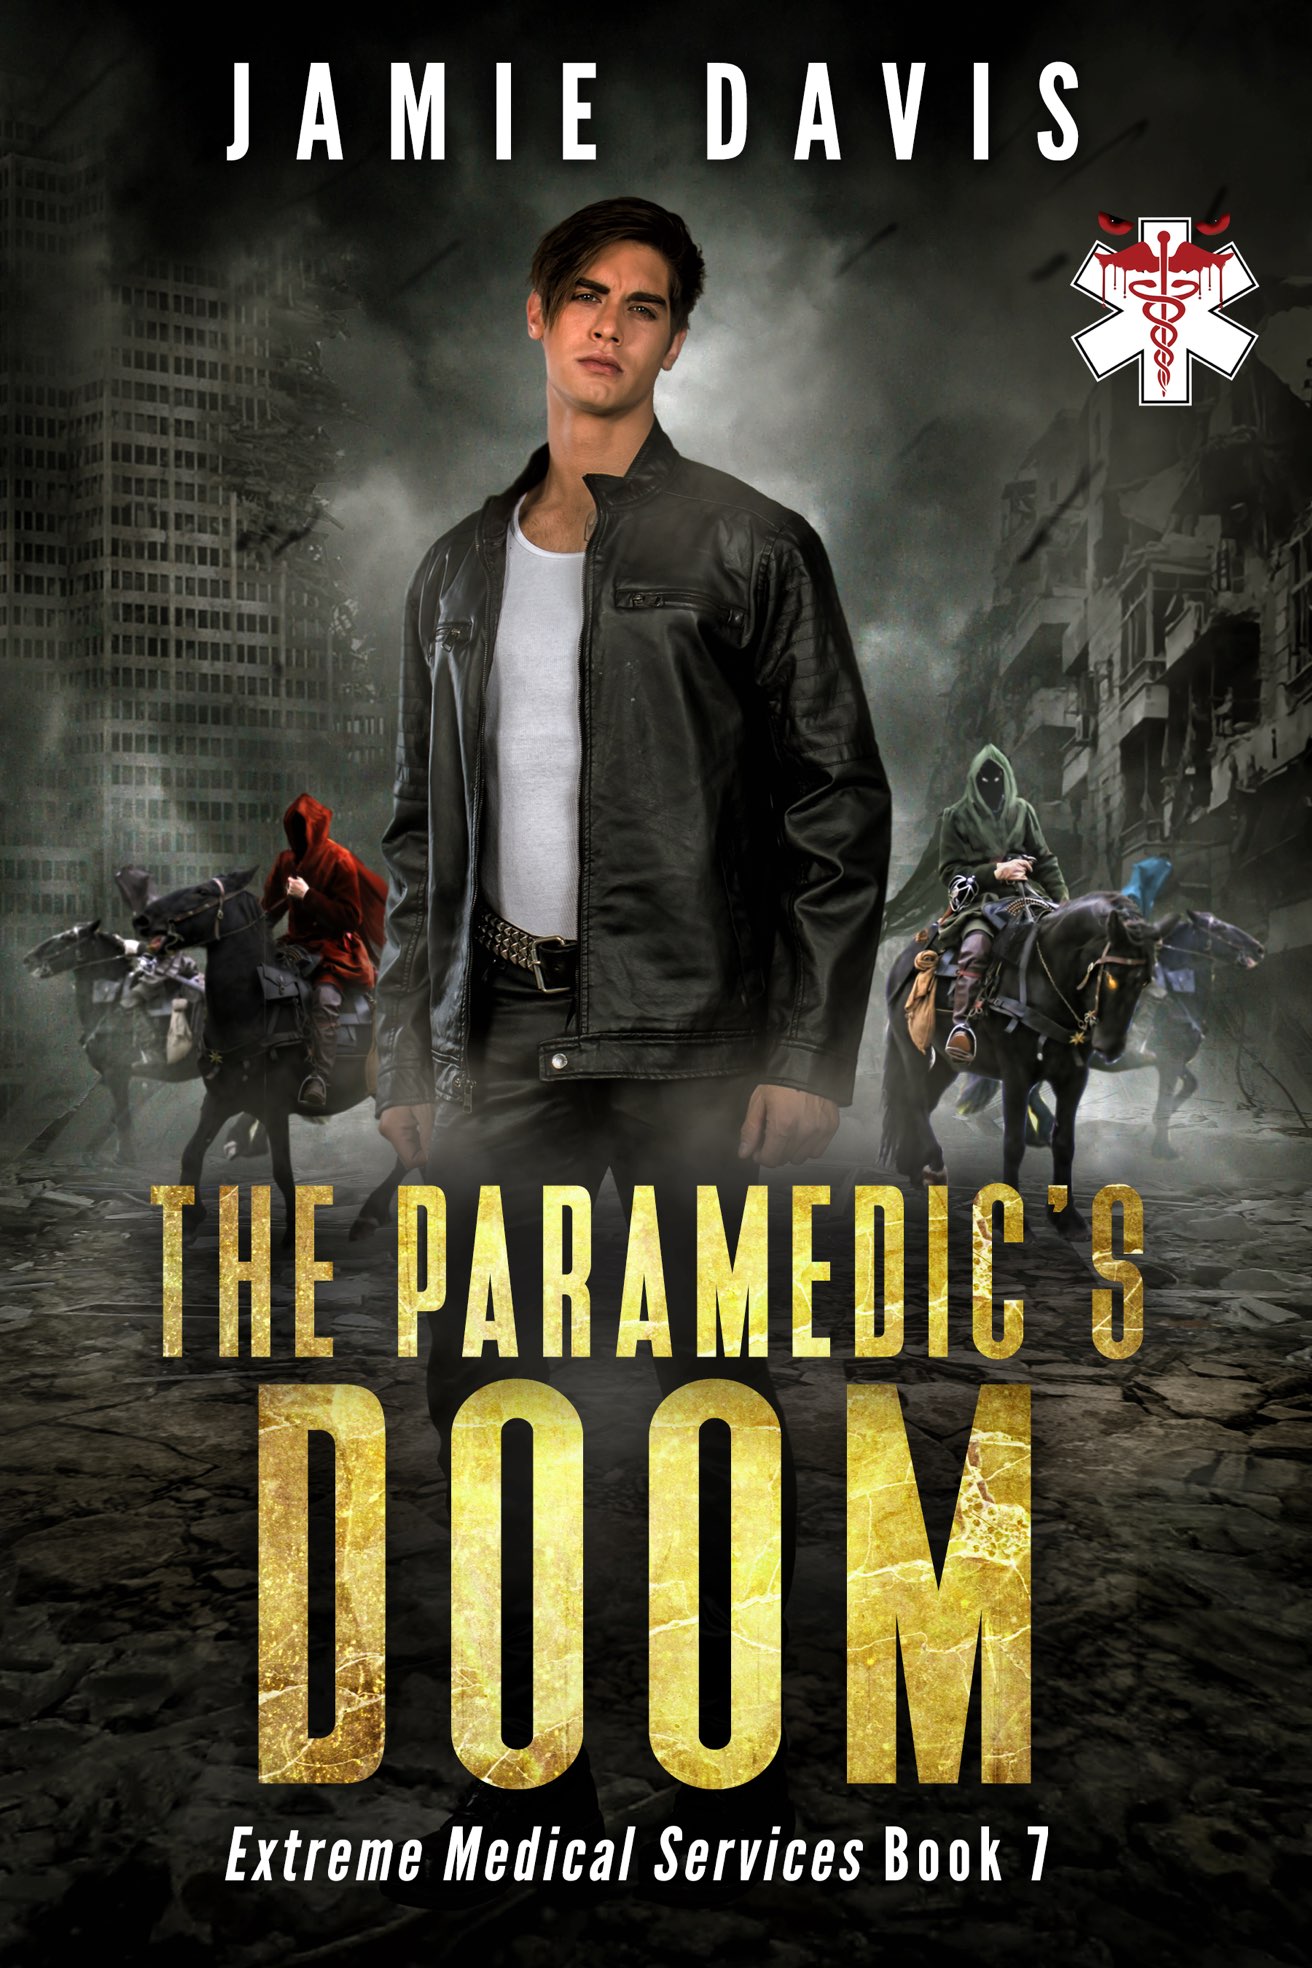 The Paramedic's Doom